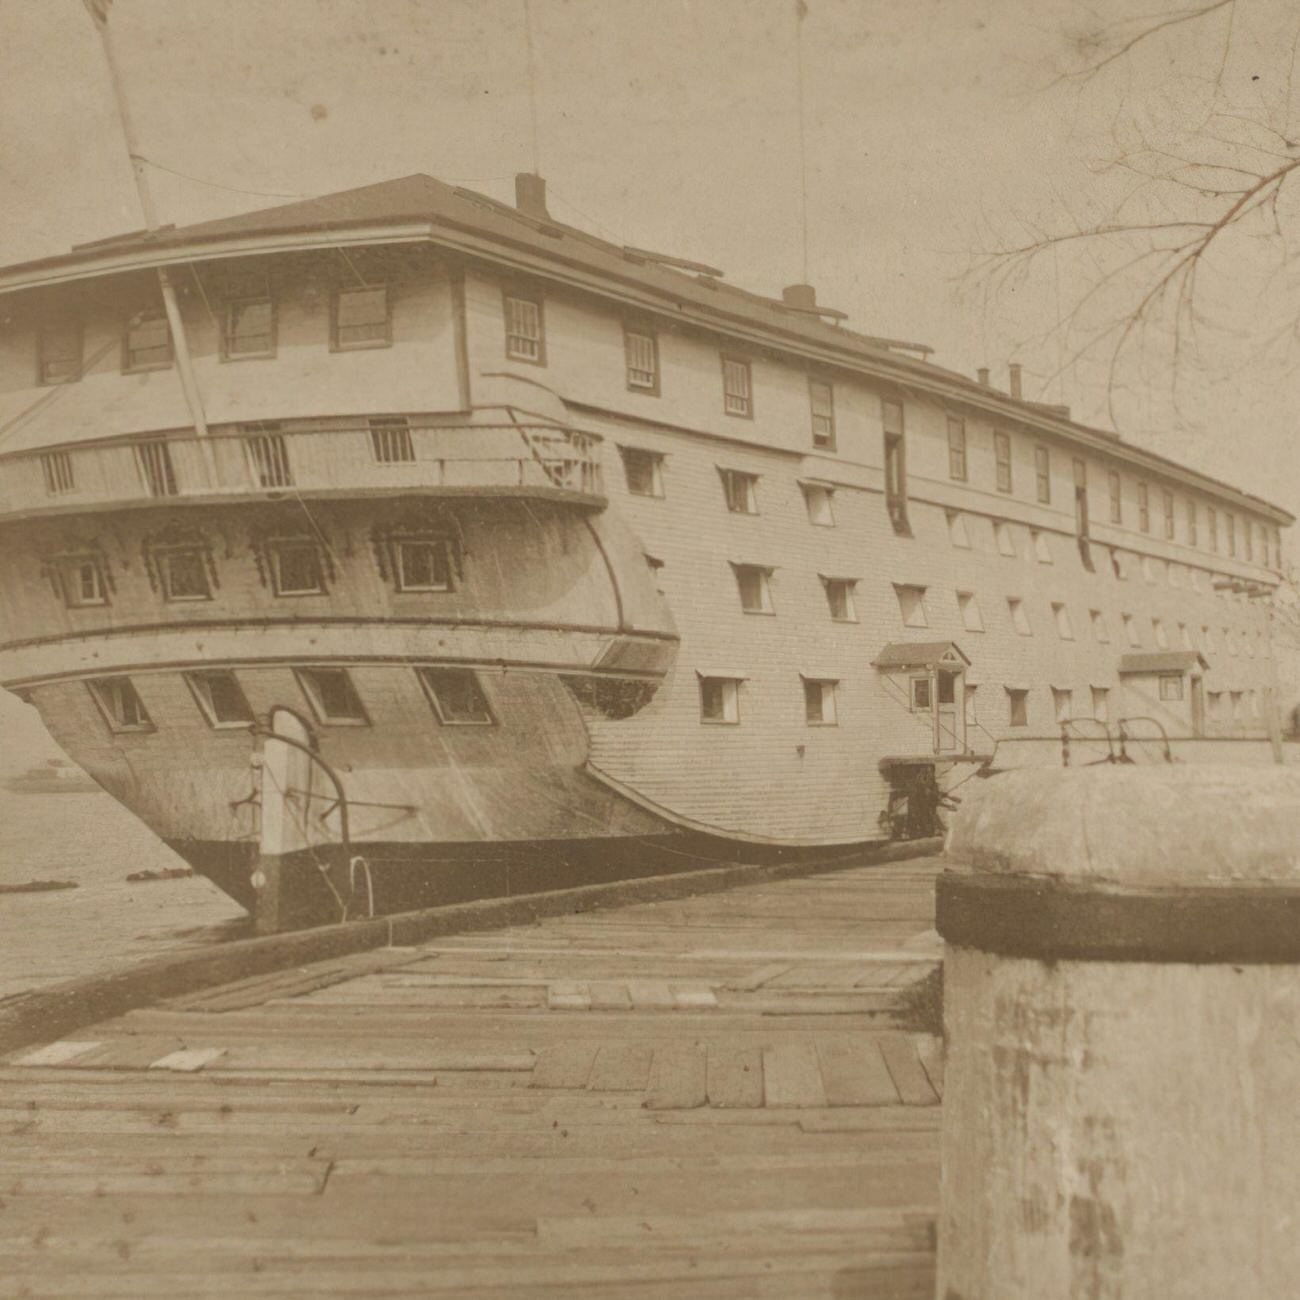 Receiving Ship At Brooklyn Navy Yard, Brooklyn, 1872